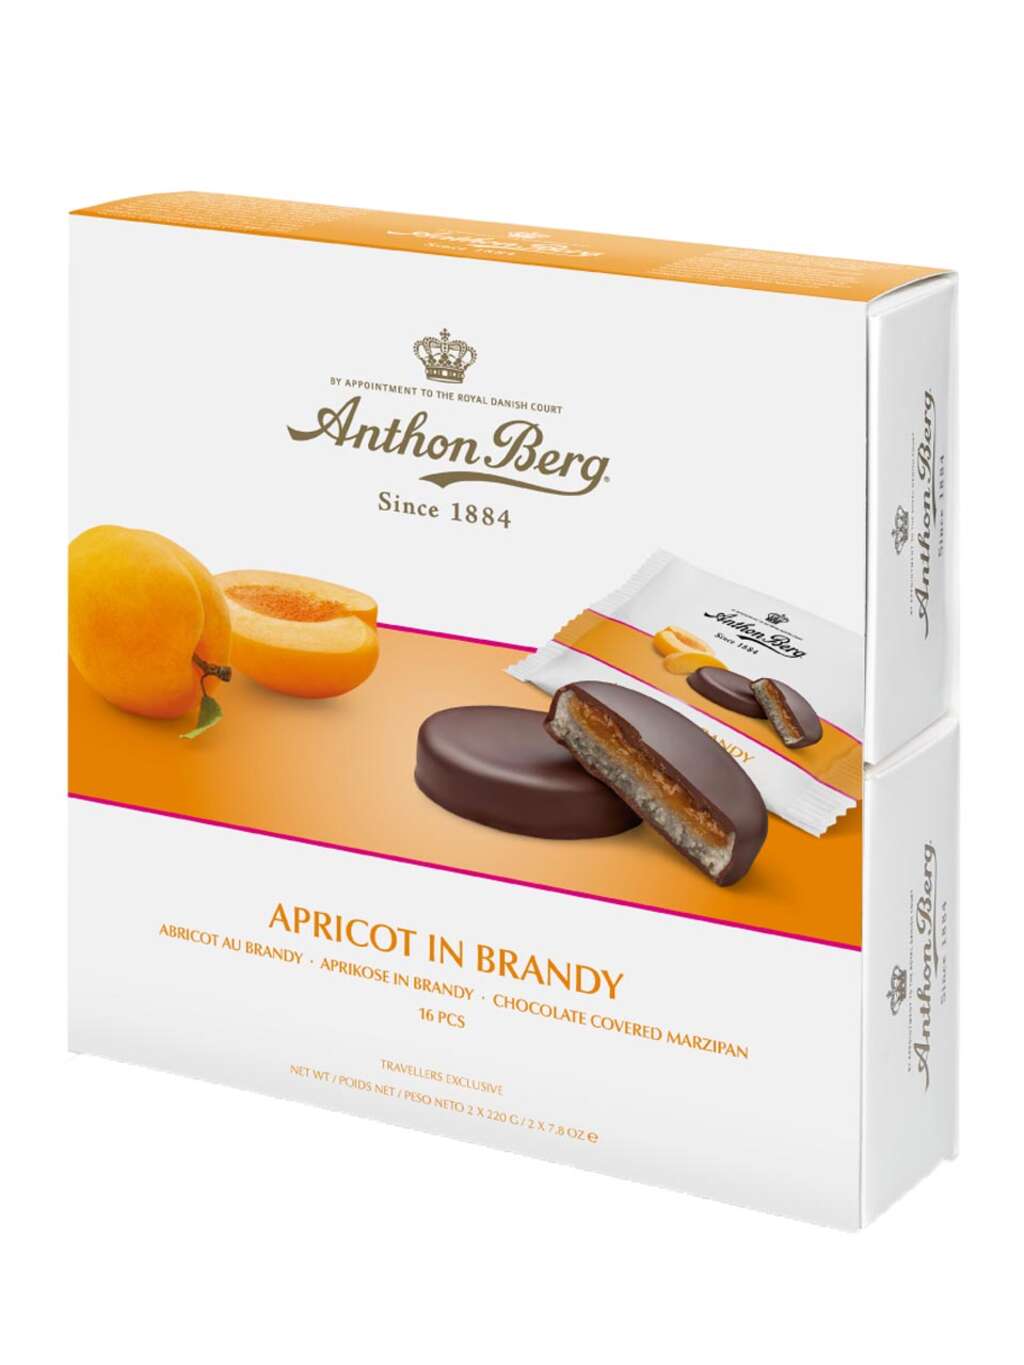 Anthon Berg Apricot in Brandy